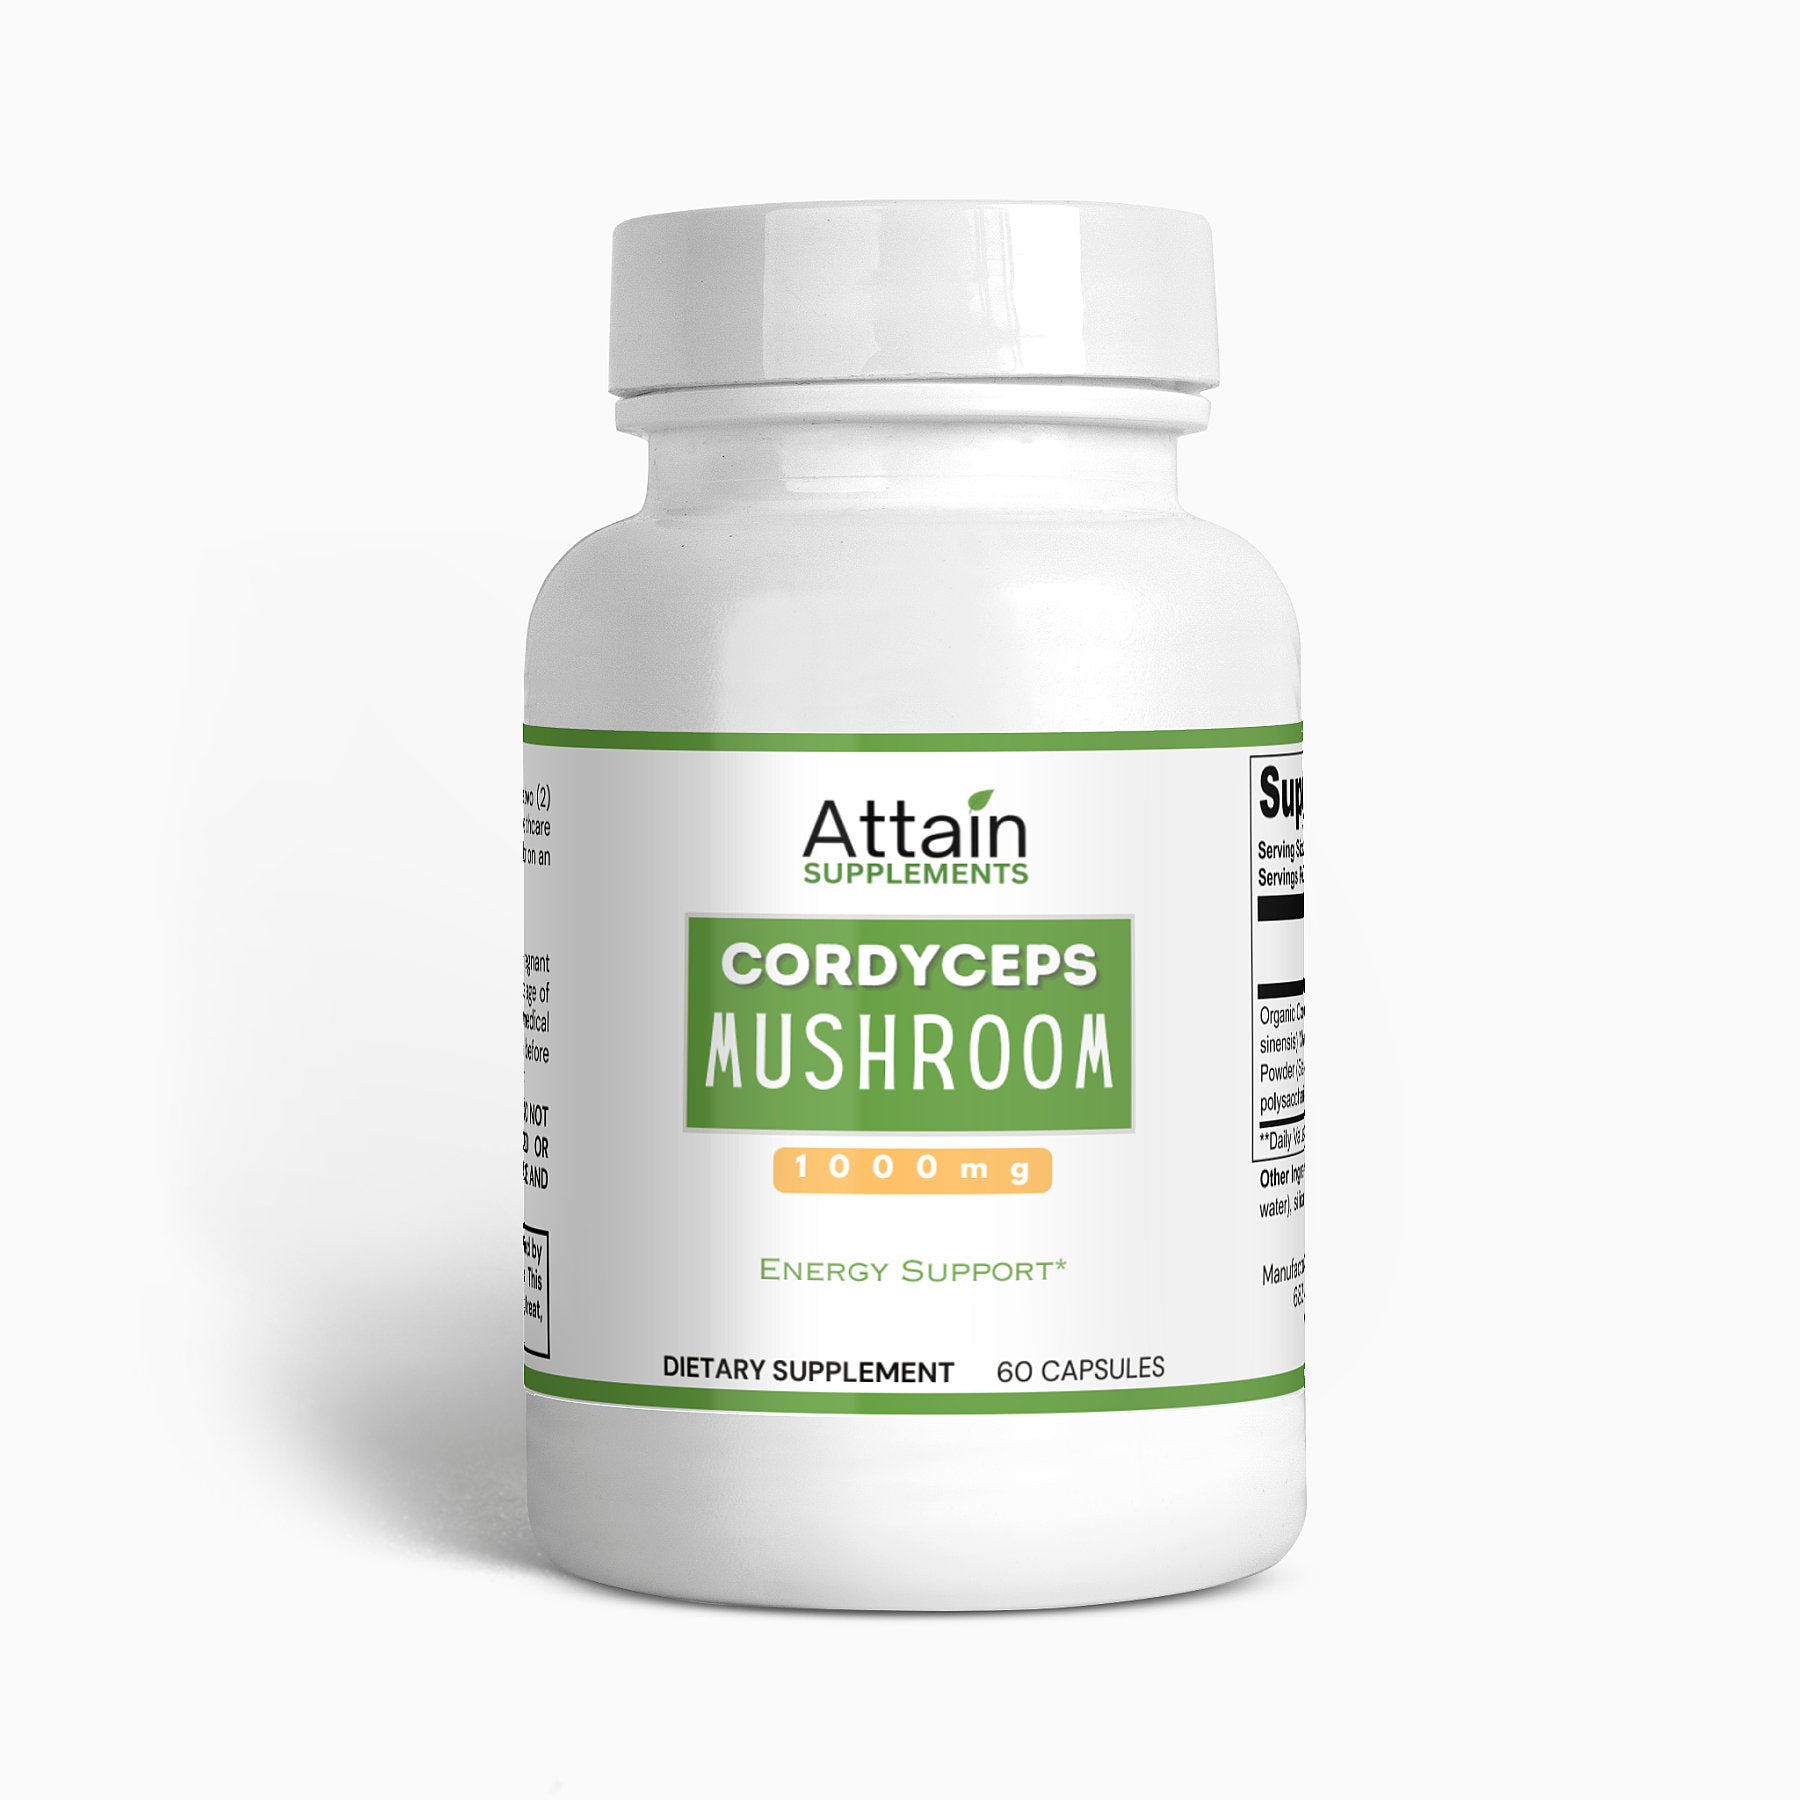 Cordyceps Mushroom Capsules - Attain Supplements